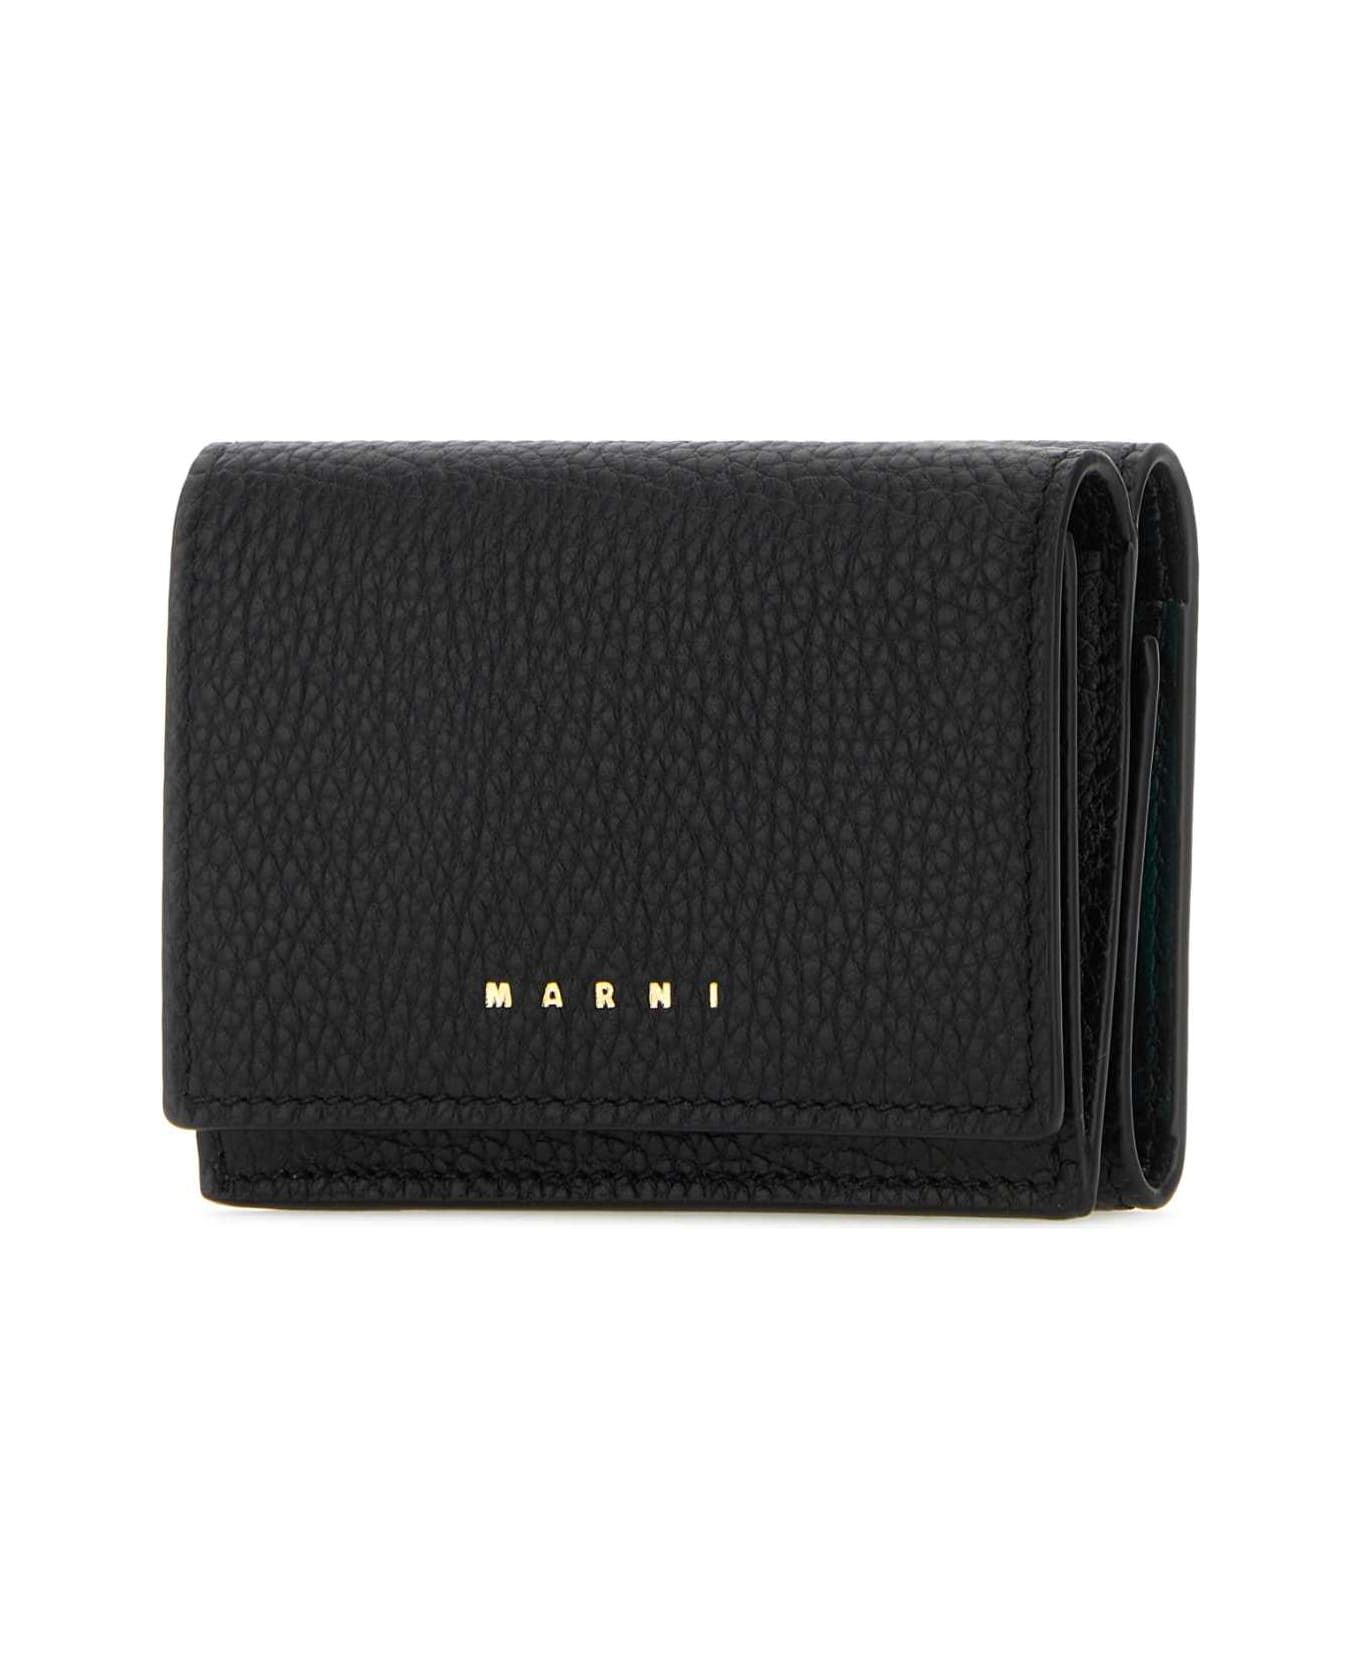 Marni Black Leather Wallet - BLACKSPHERICALGREEN 財布